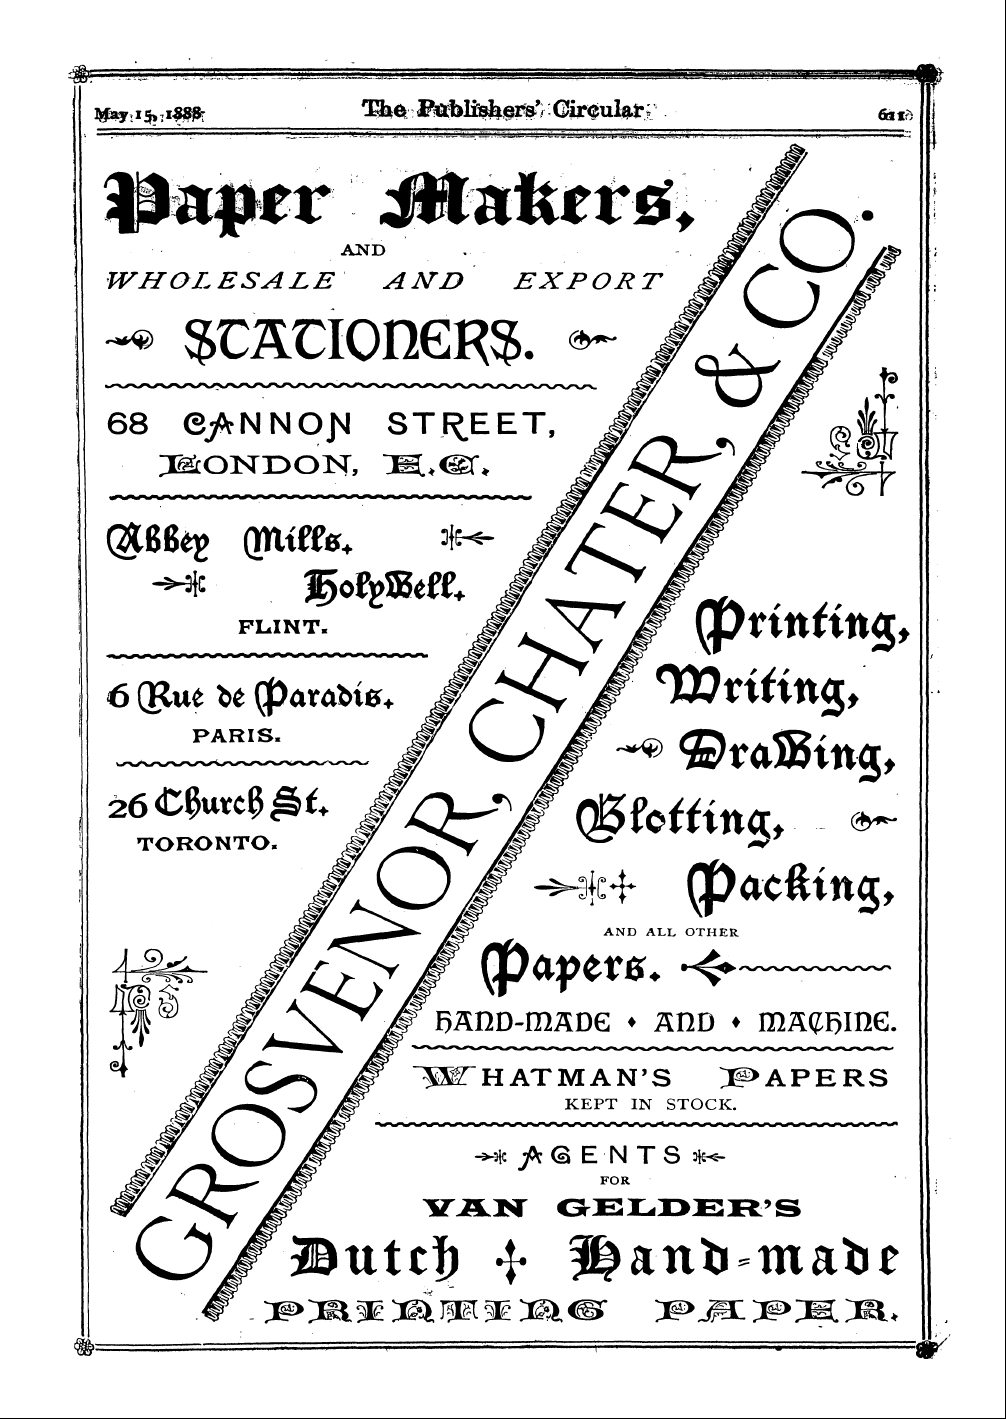 Publishers’ Circular (1880-1890): jS F Y, 1st edition: 113